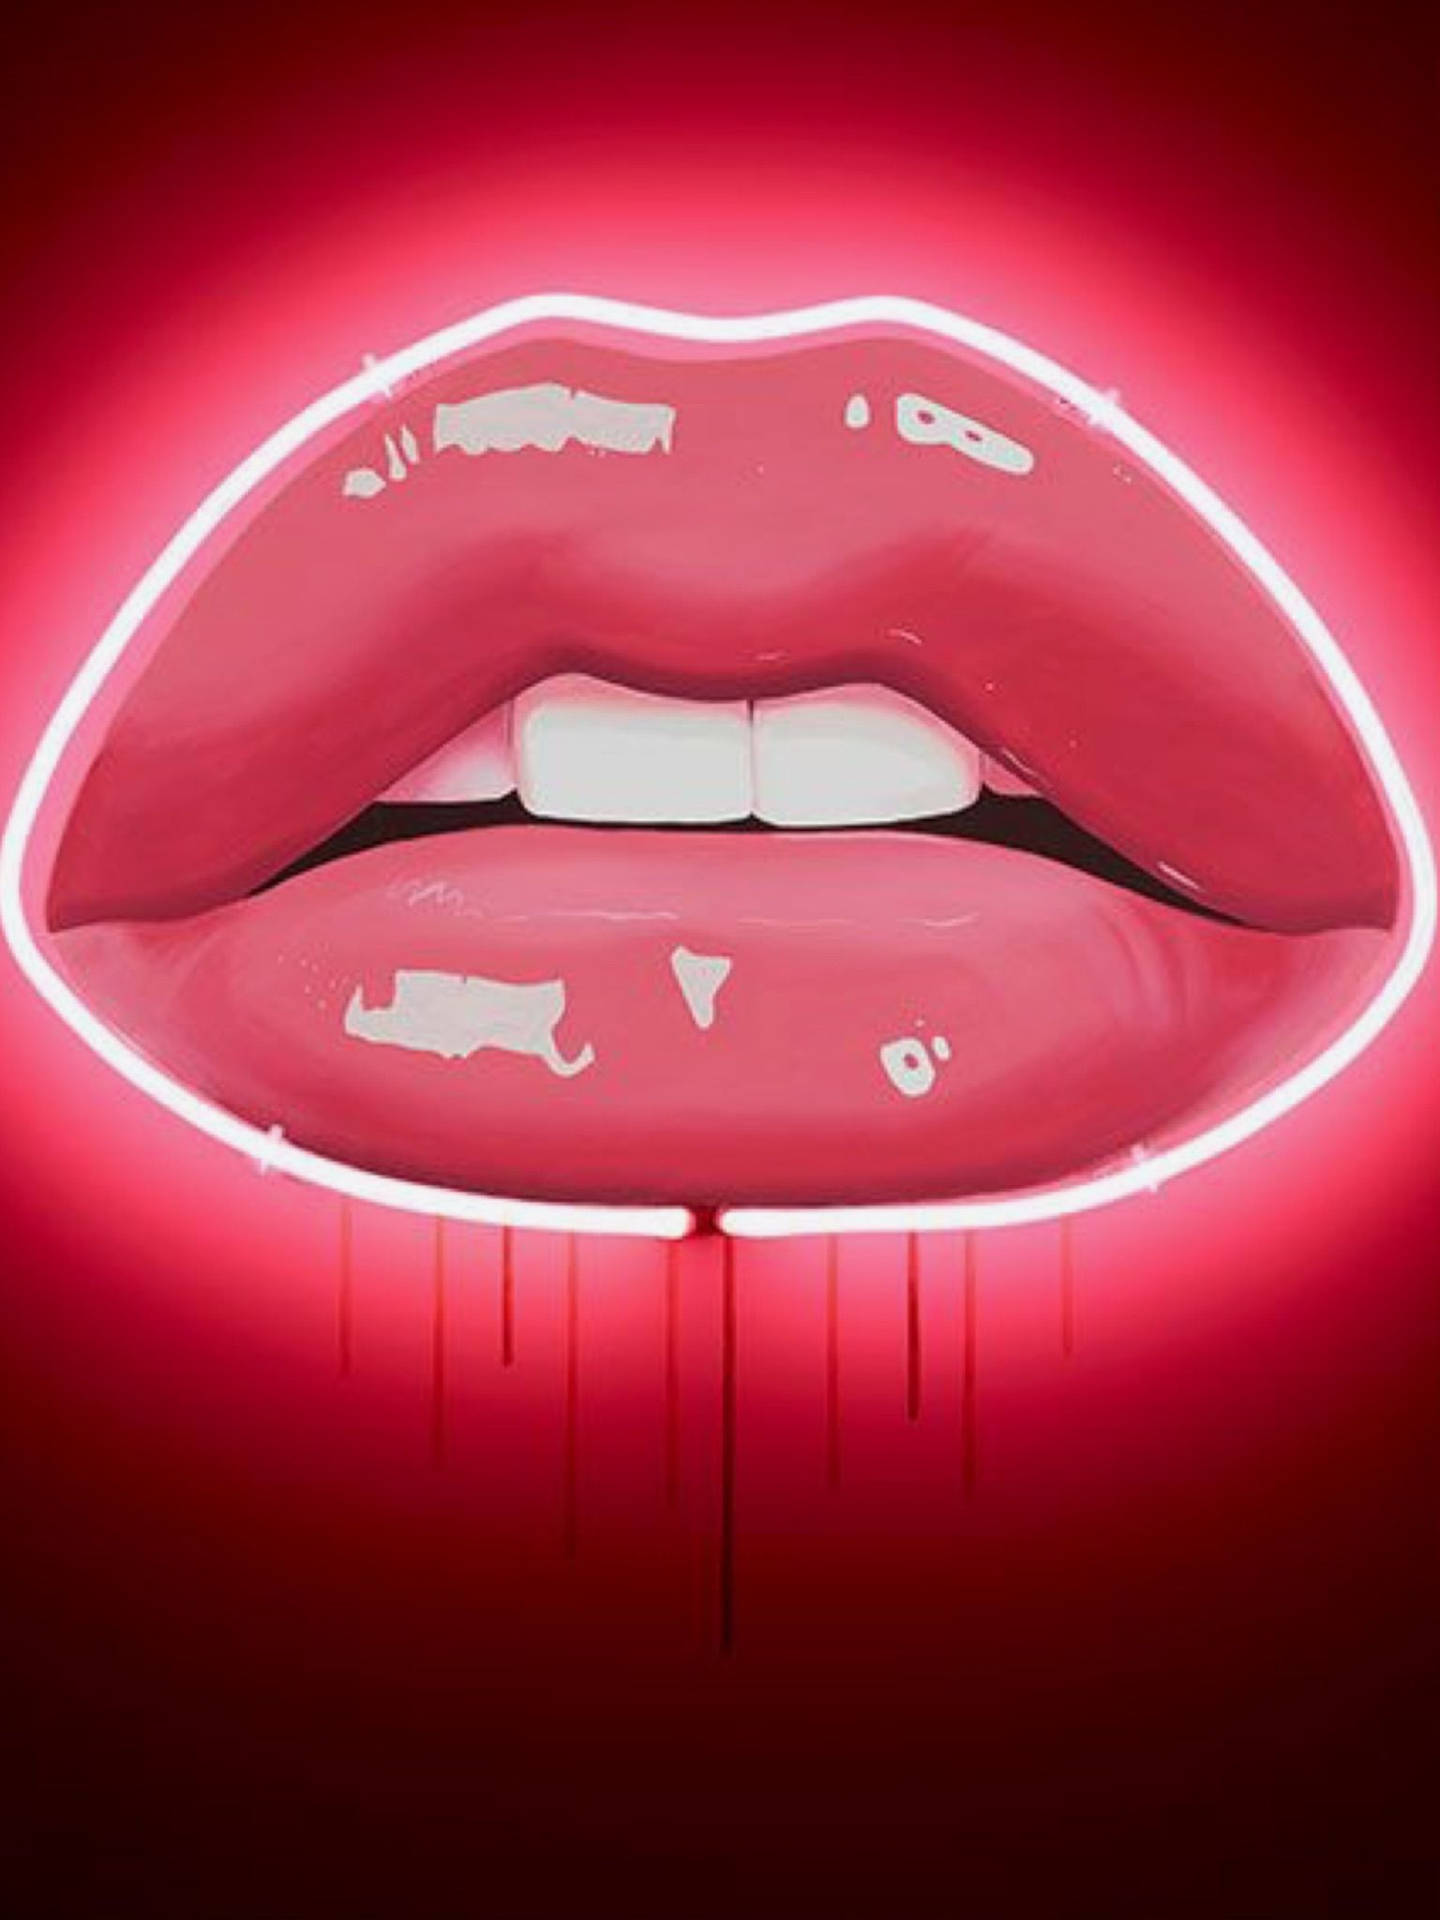 Glossigerosige Lippen Pop Art. Wallpaper